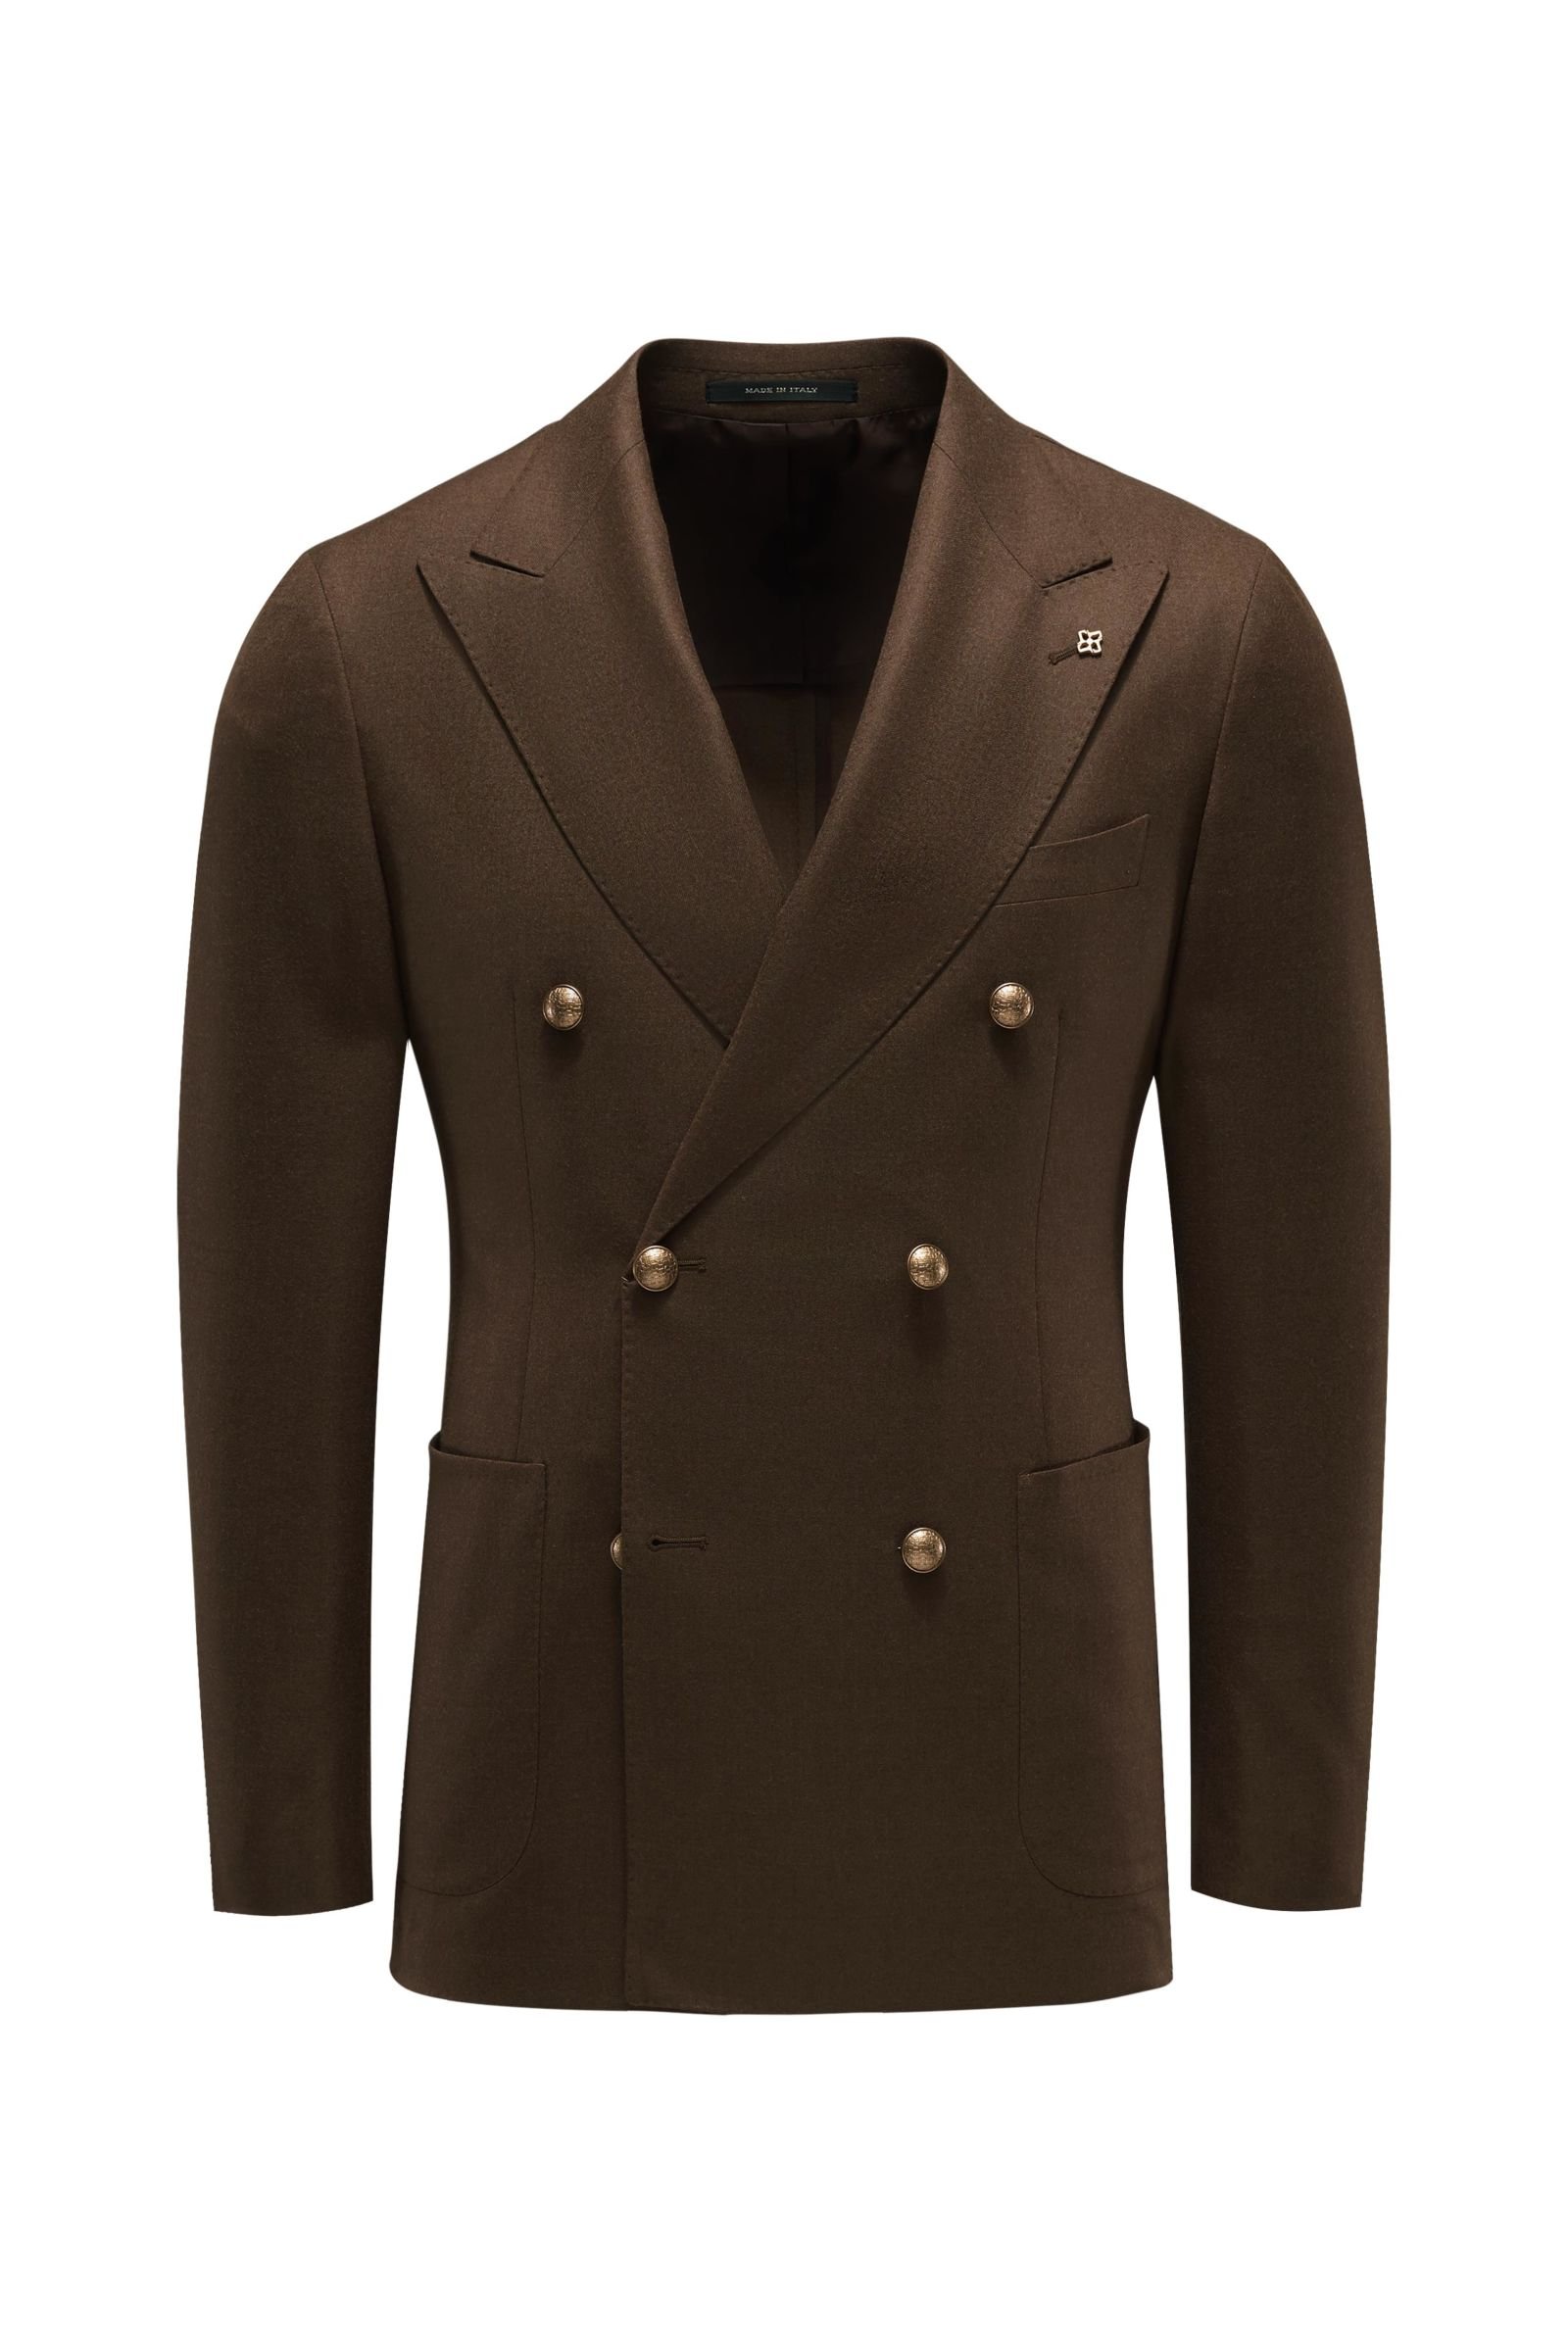 Smart-casual jacket brown